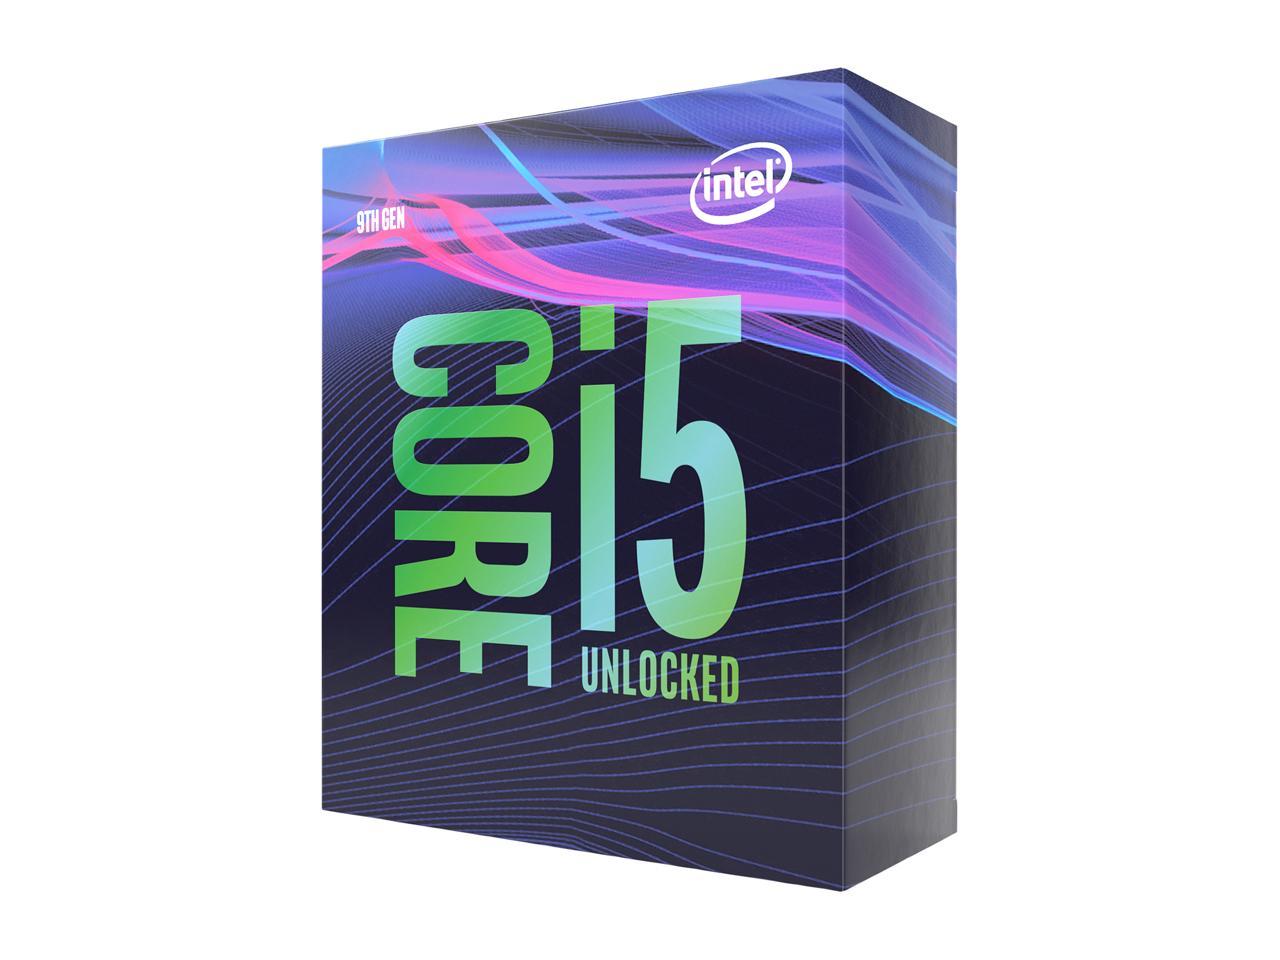 Intel Core i5 9th Gen - Core i5-9600K Coffee Lake 6-Core 3.7 GHz (4.6 GHz  Turbo) LGA 1151 (300 Series) 95W BX80684I59600K Desktop Processor Intel UHD  